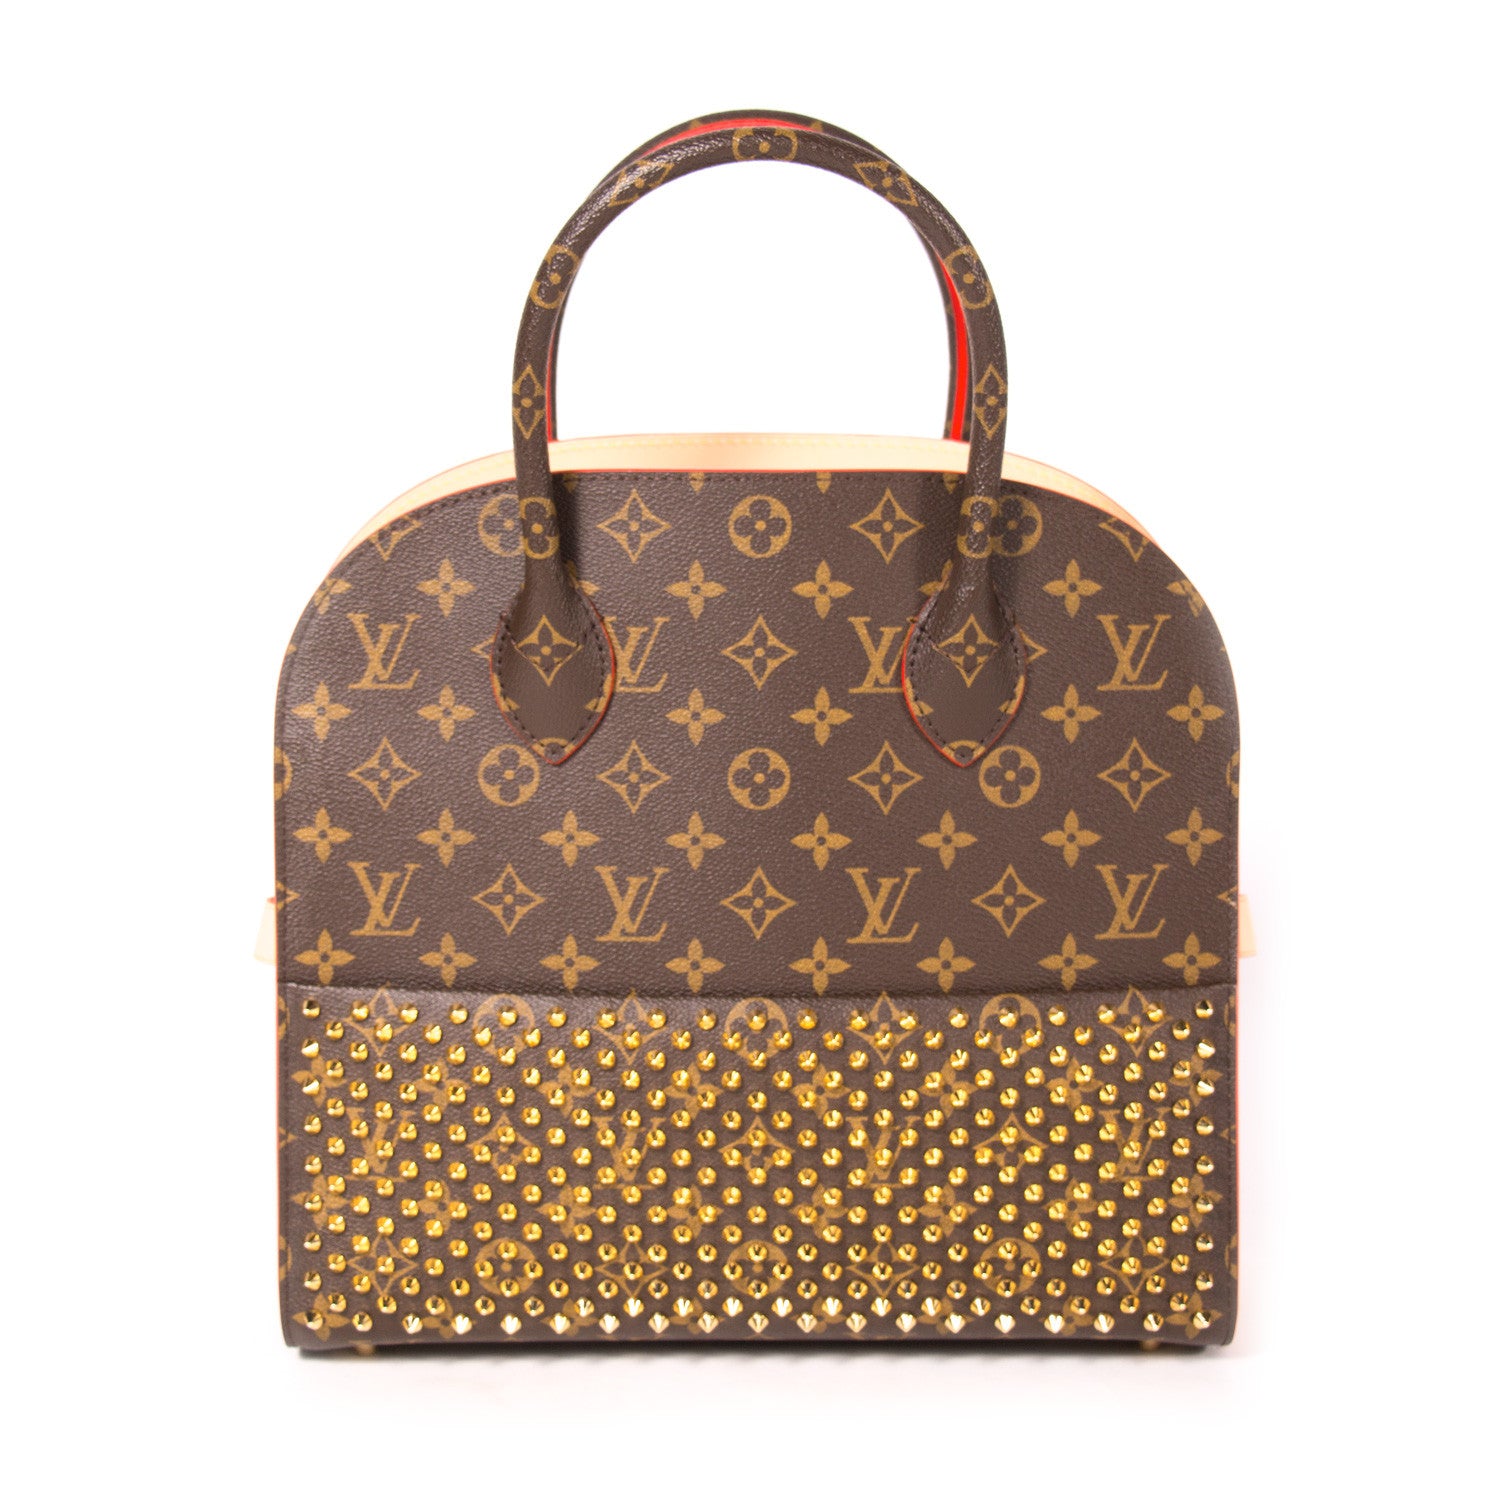 Shop authentic Louis Vuitton Shopping Bag Christian Louboutin at ...